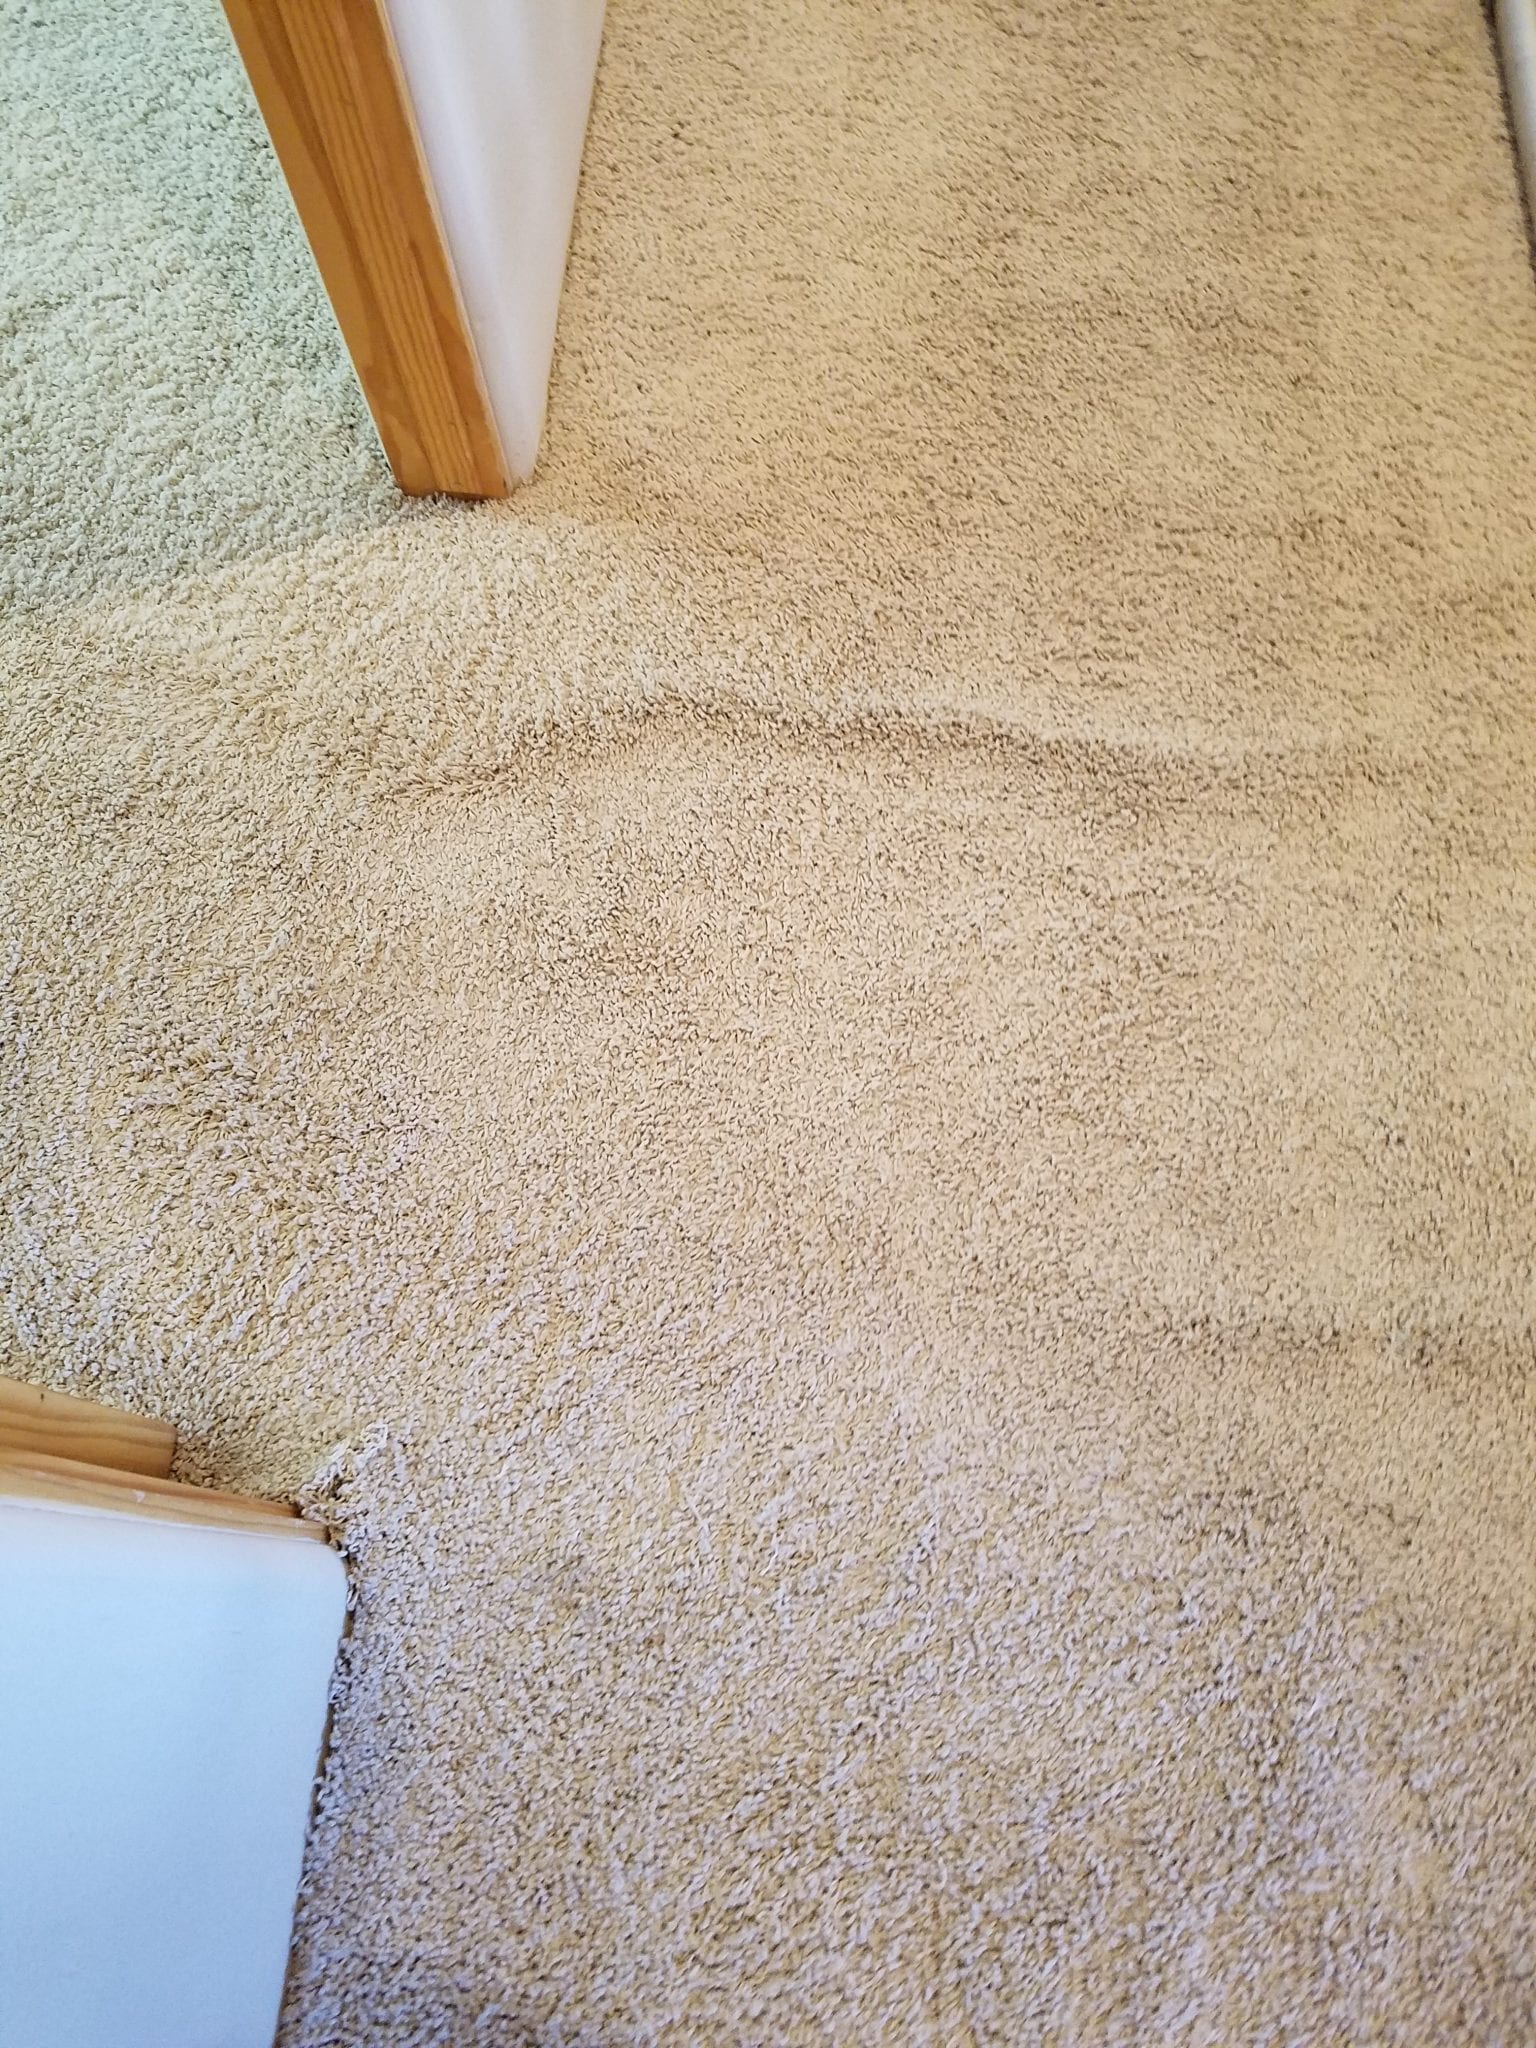 Albuquerque Carpet Restretch and Clean New Mexico Carpet Repair